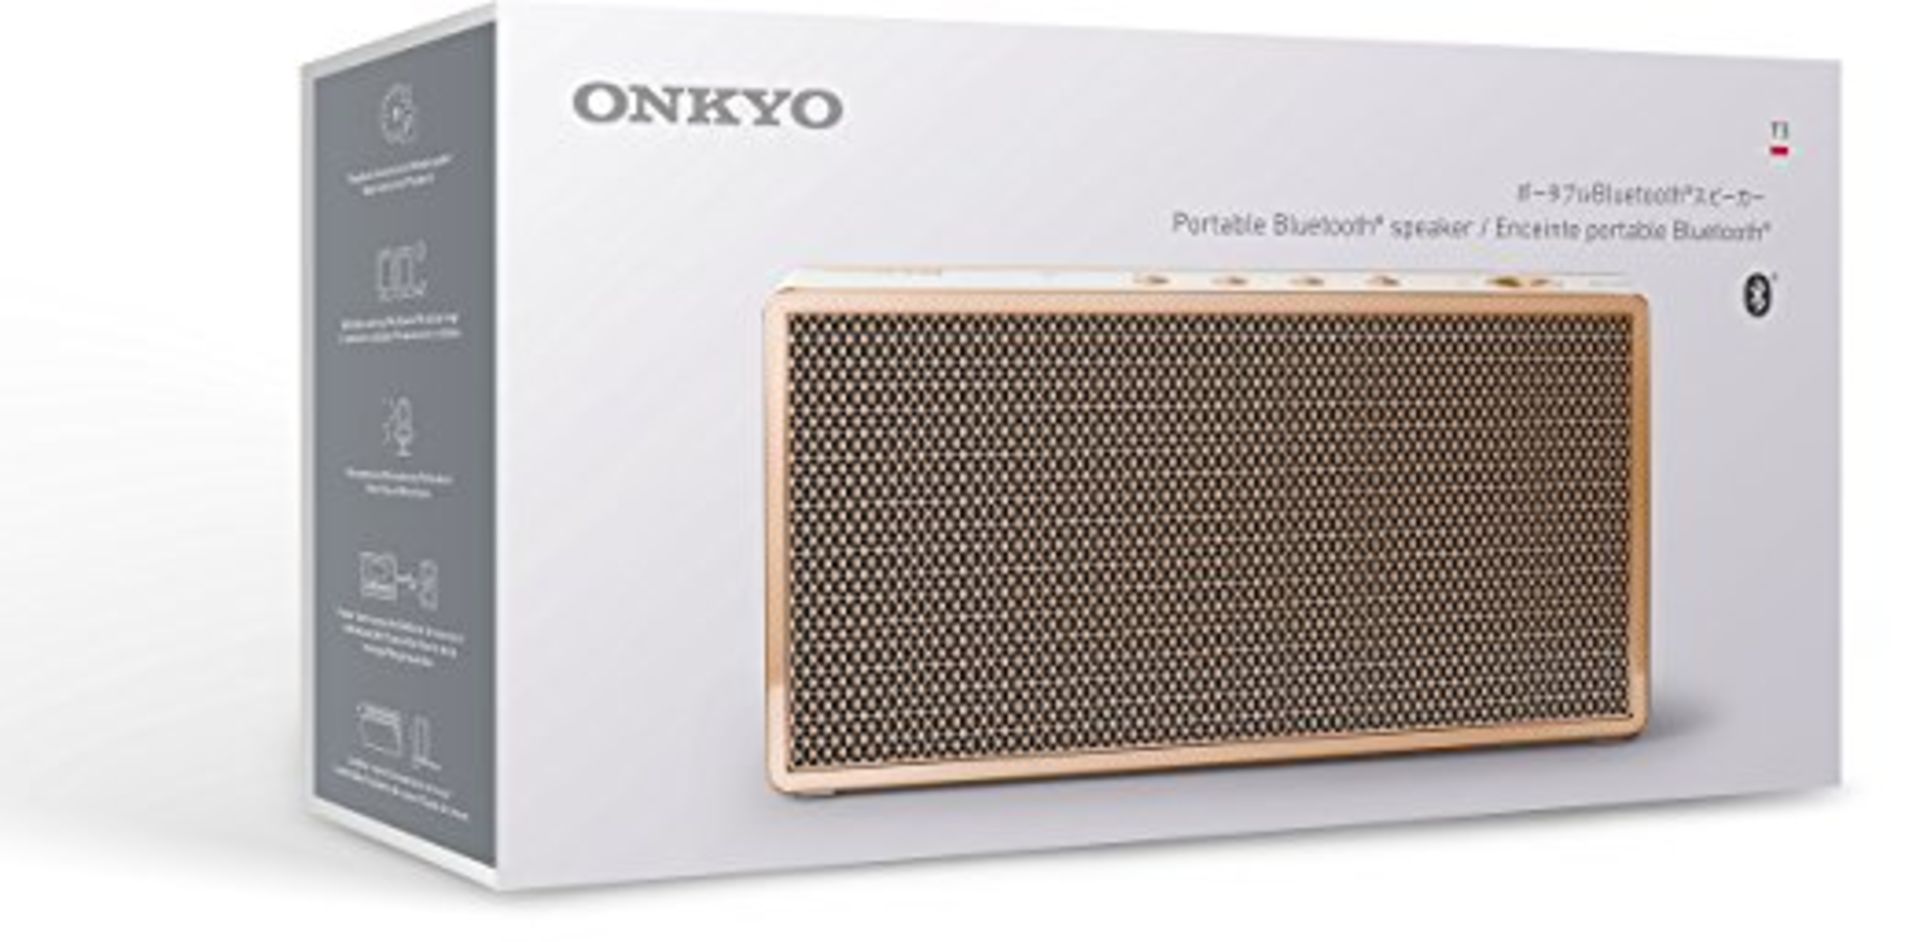 V *TRADE QTY* Brand New Onkyo T3 8W Portable Bluetooth Speaker - 2 x 1.5" Drivers & Passive Radiator